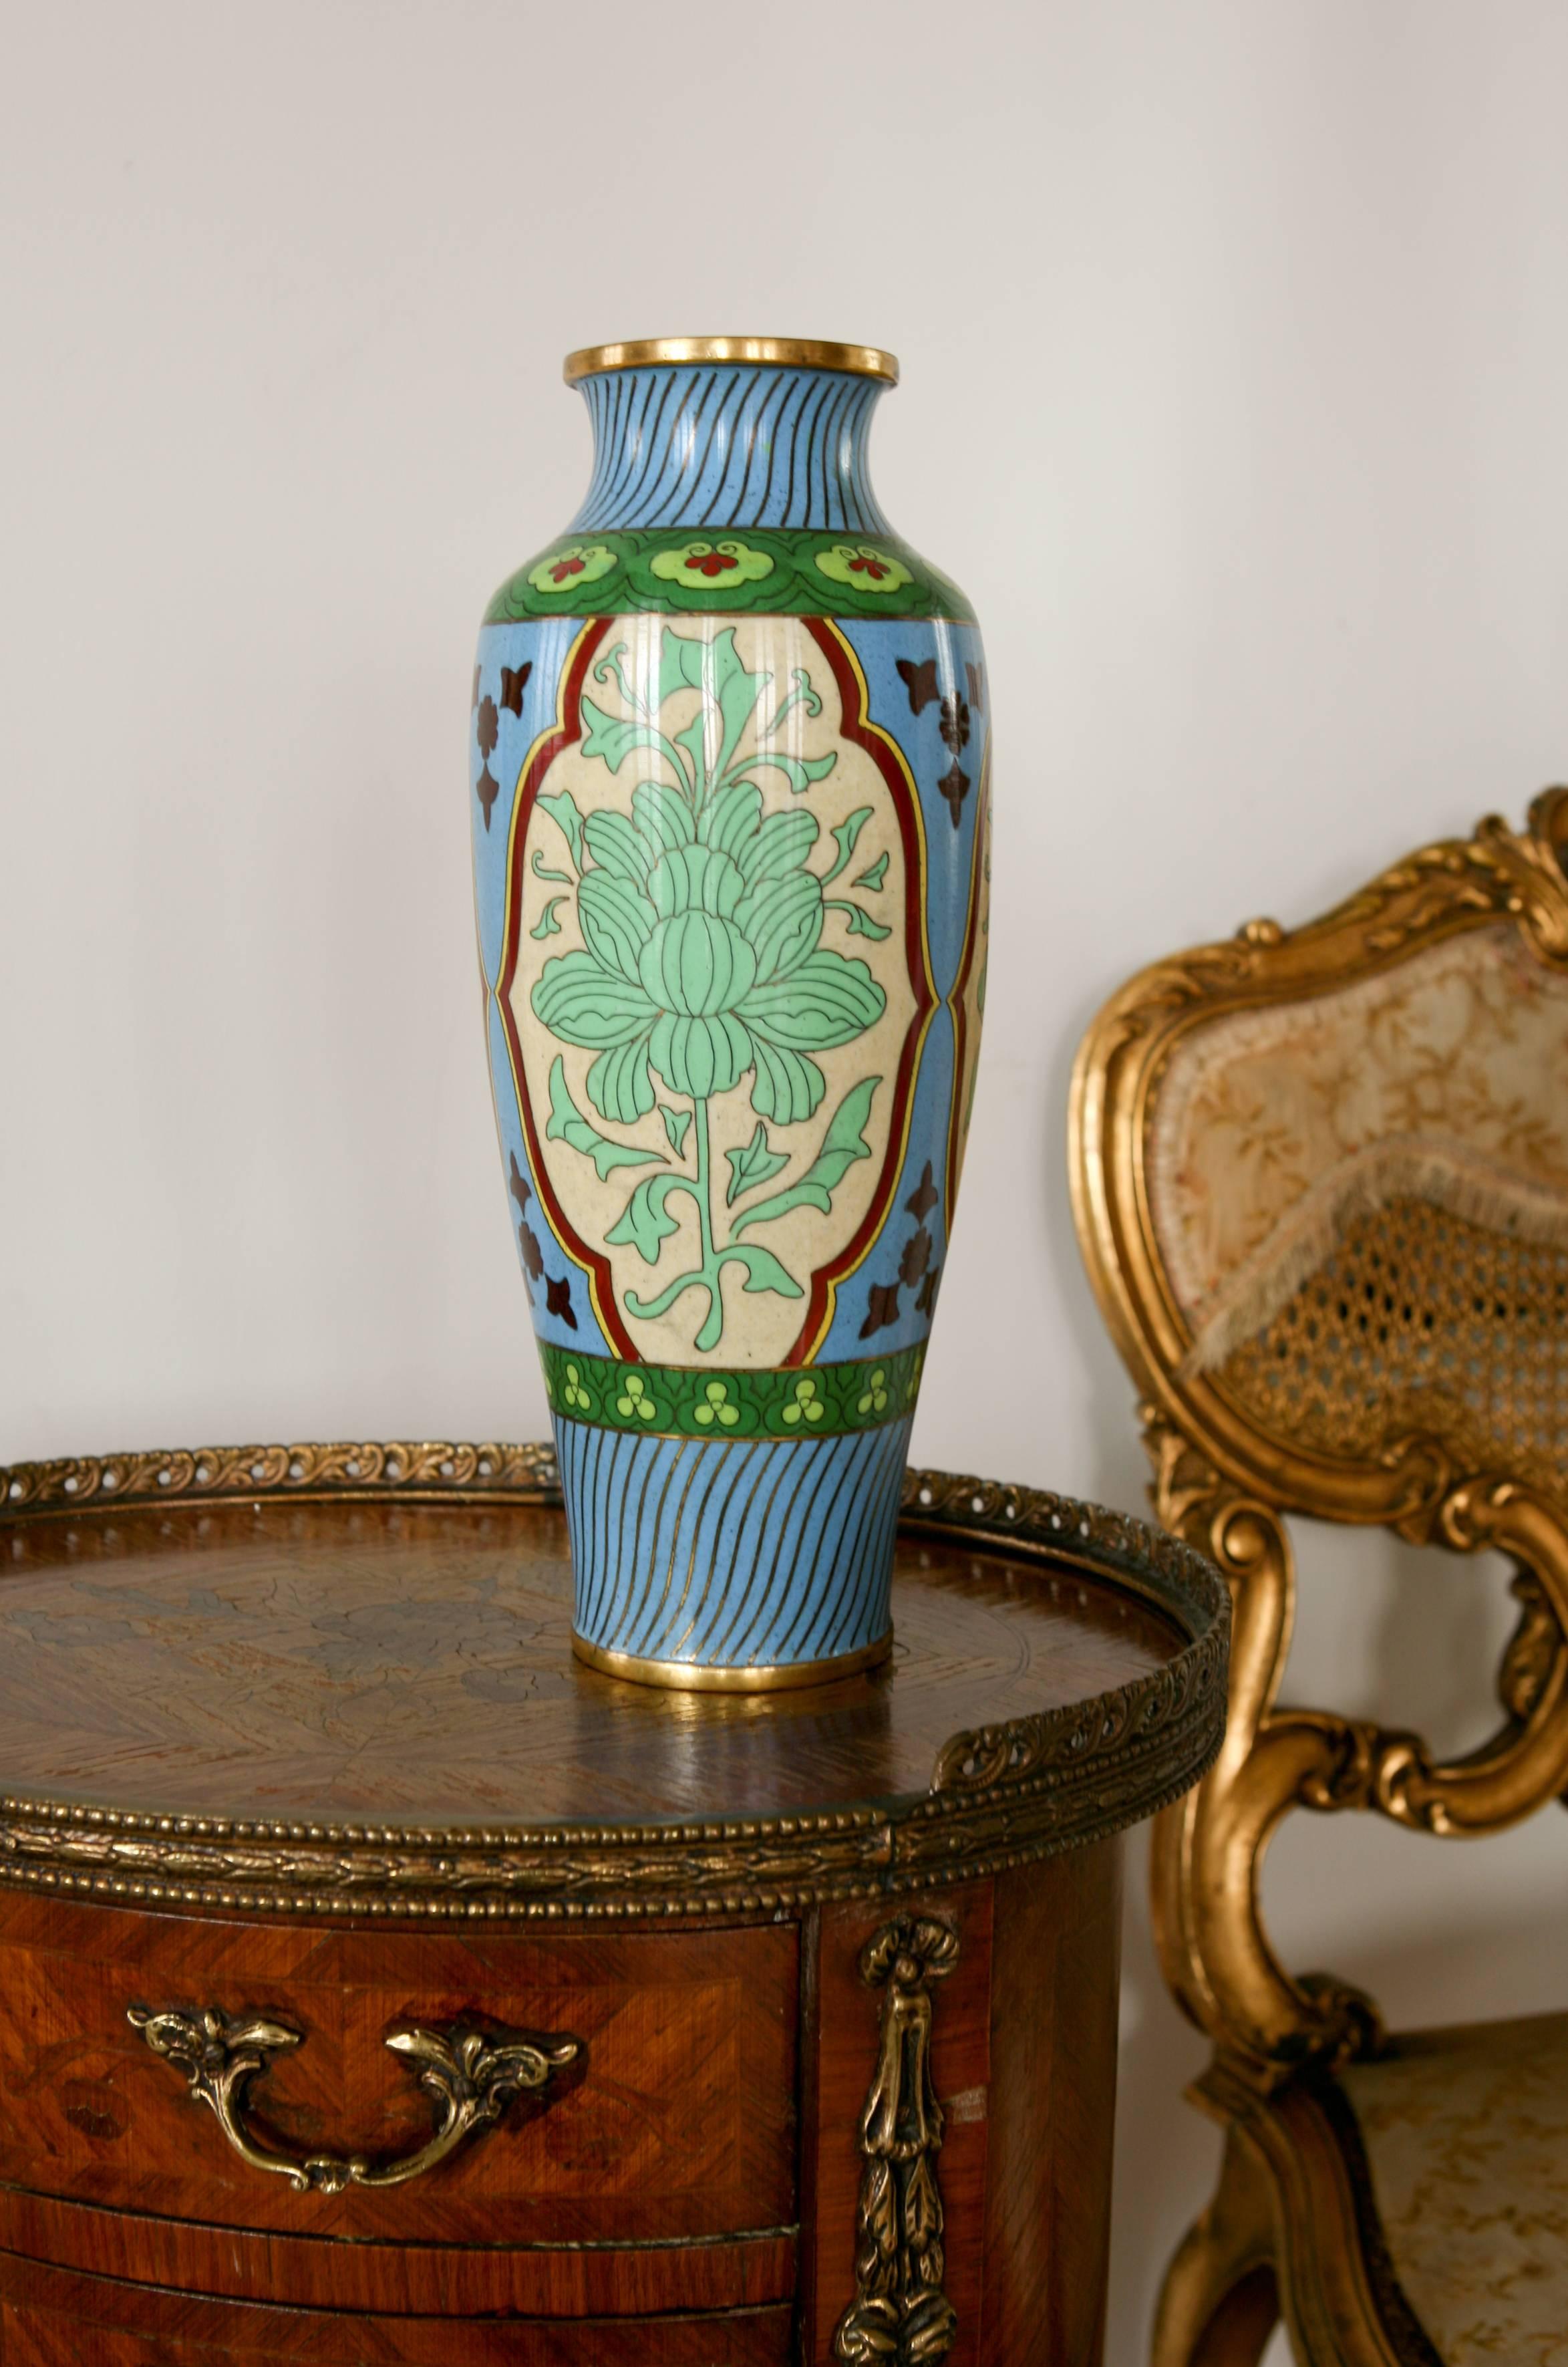 19th Century cloisonné enamel vase in perfect condition.
France, circa 1880